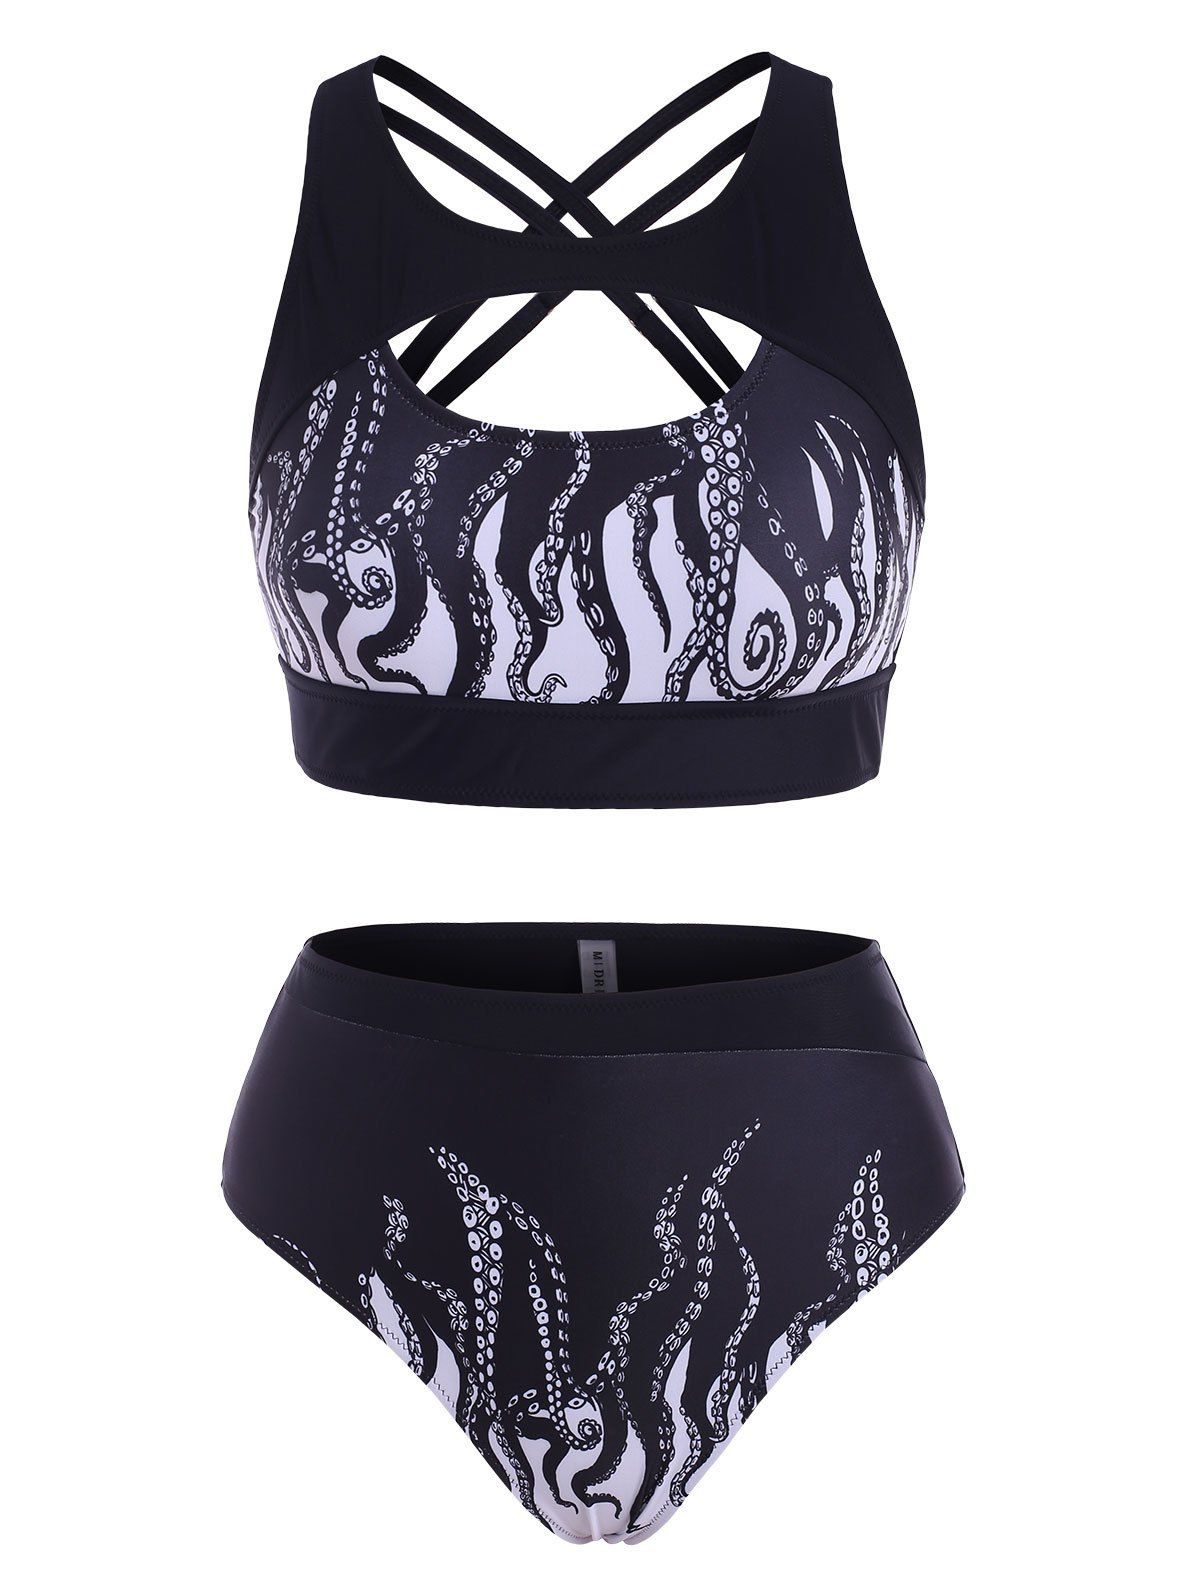 Beach Cutout Swimsuit Criss Cross Octopus Print Tankini Swimwear - BLACK S